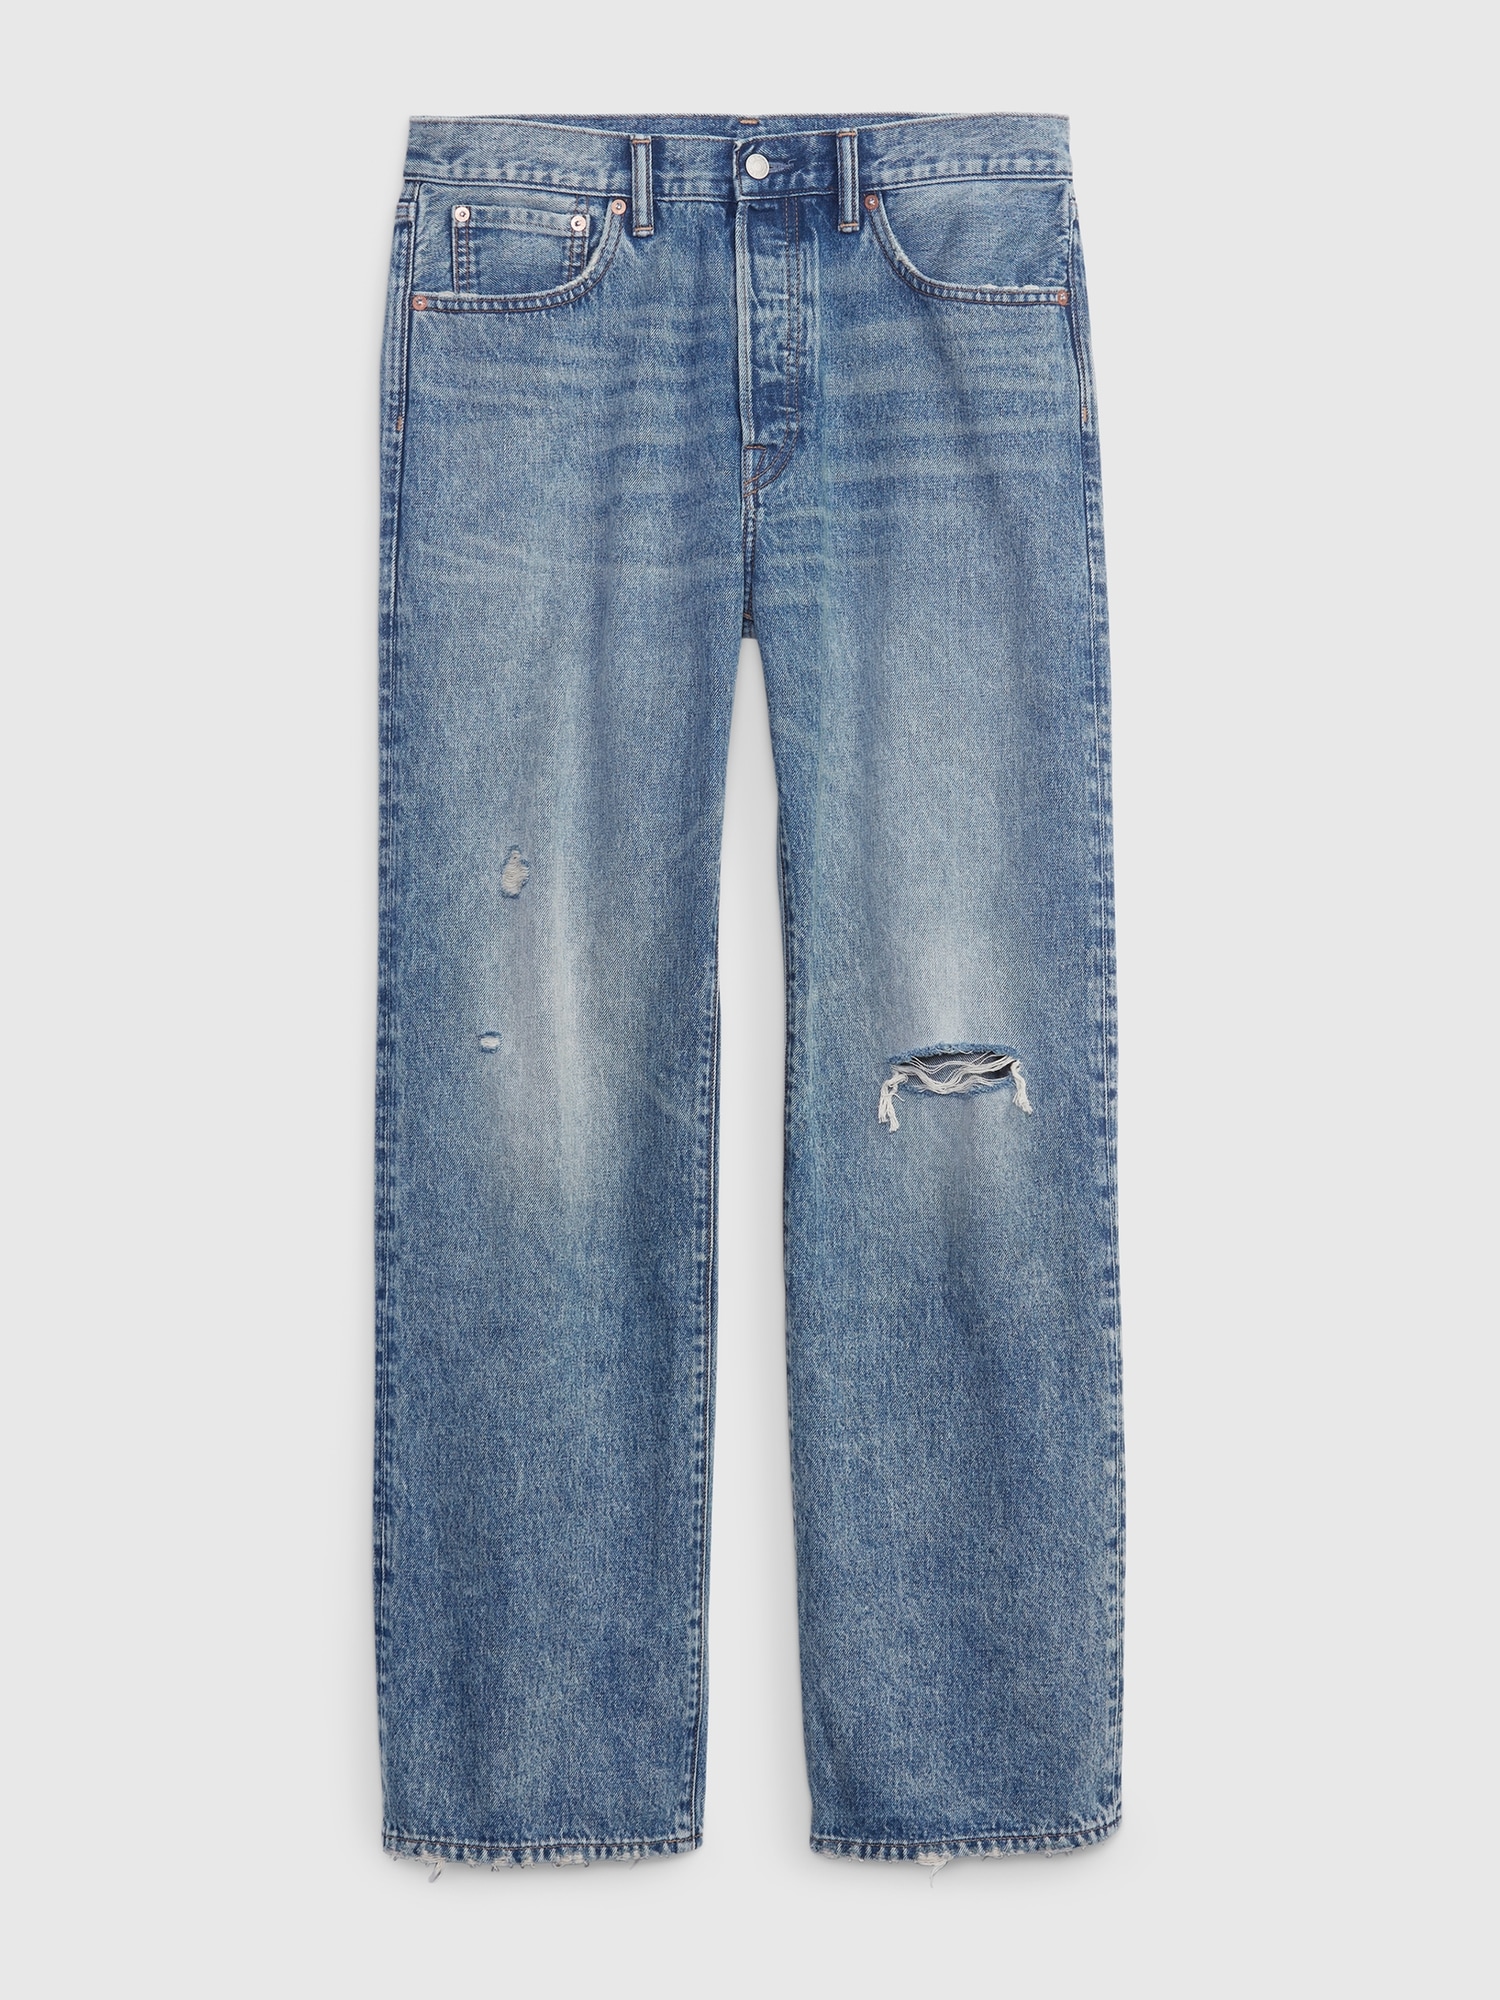 Classic and Comfortable Gap Men's Cone Denim Jeans